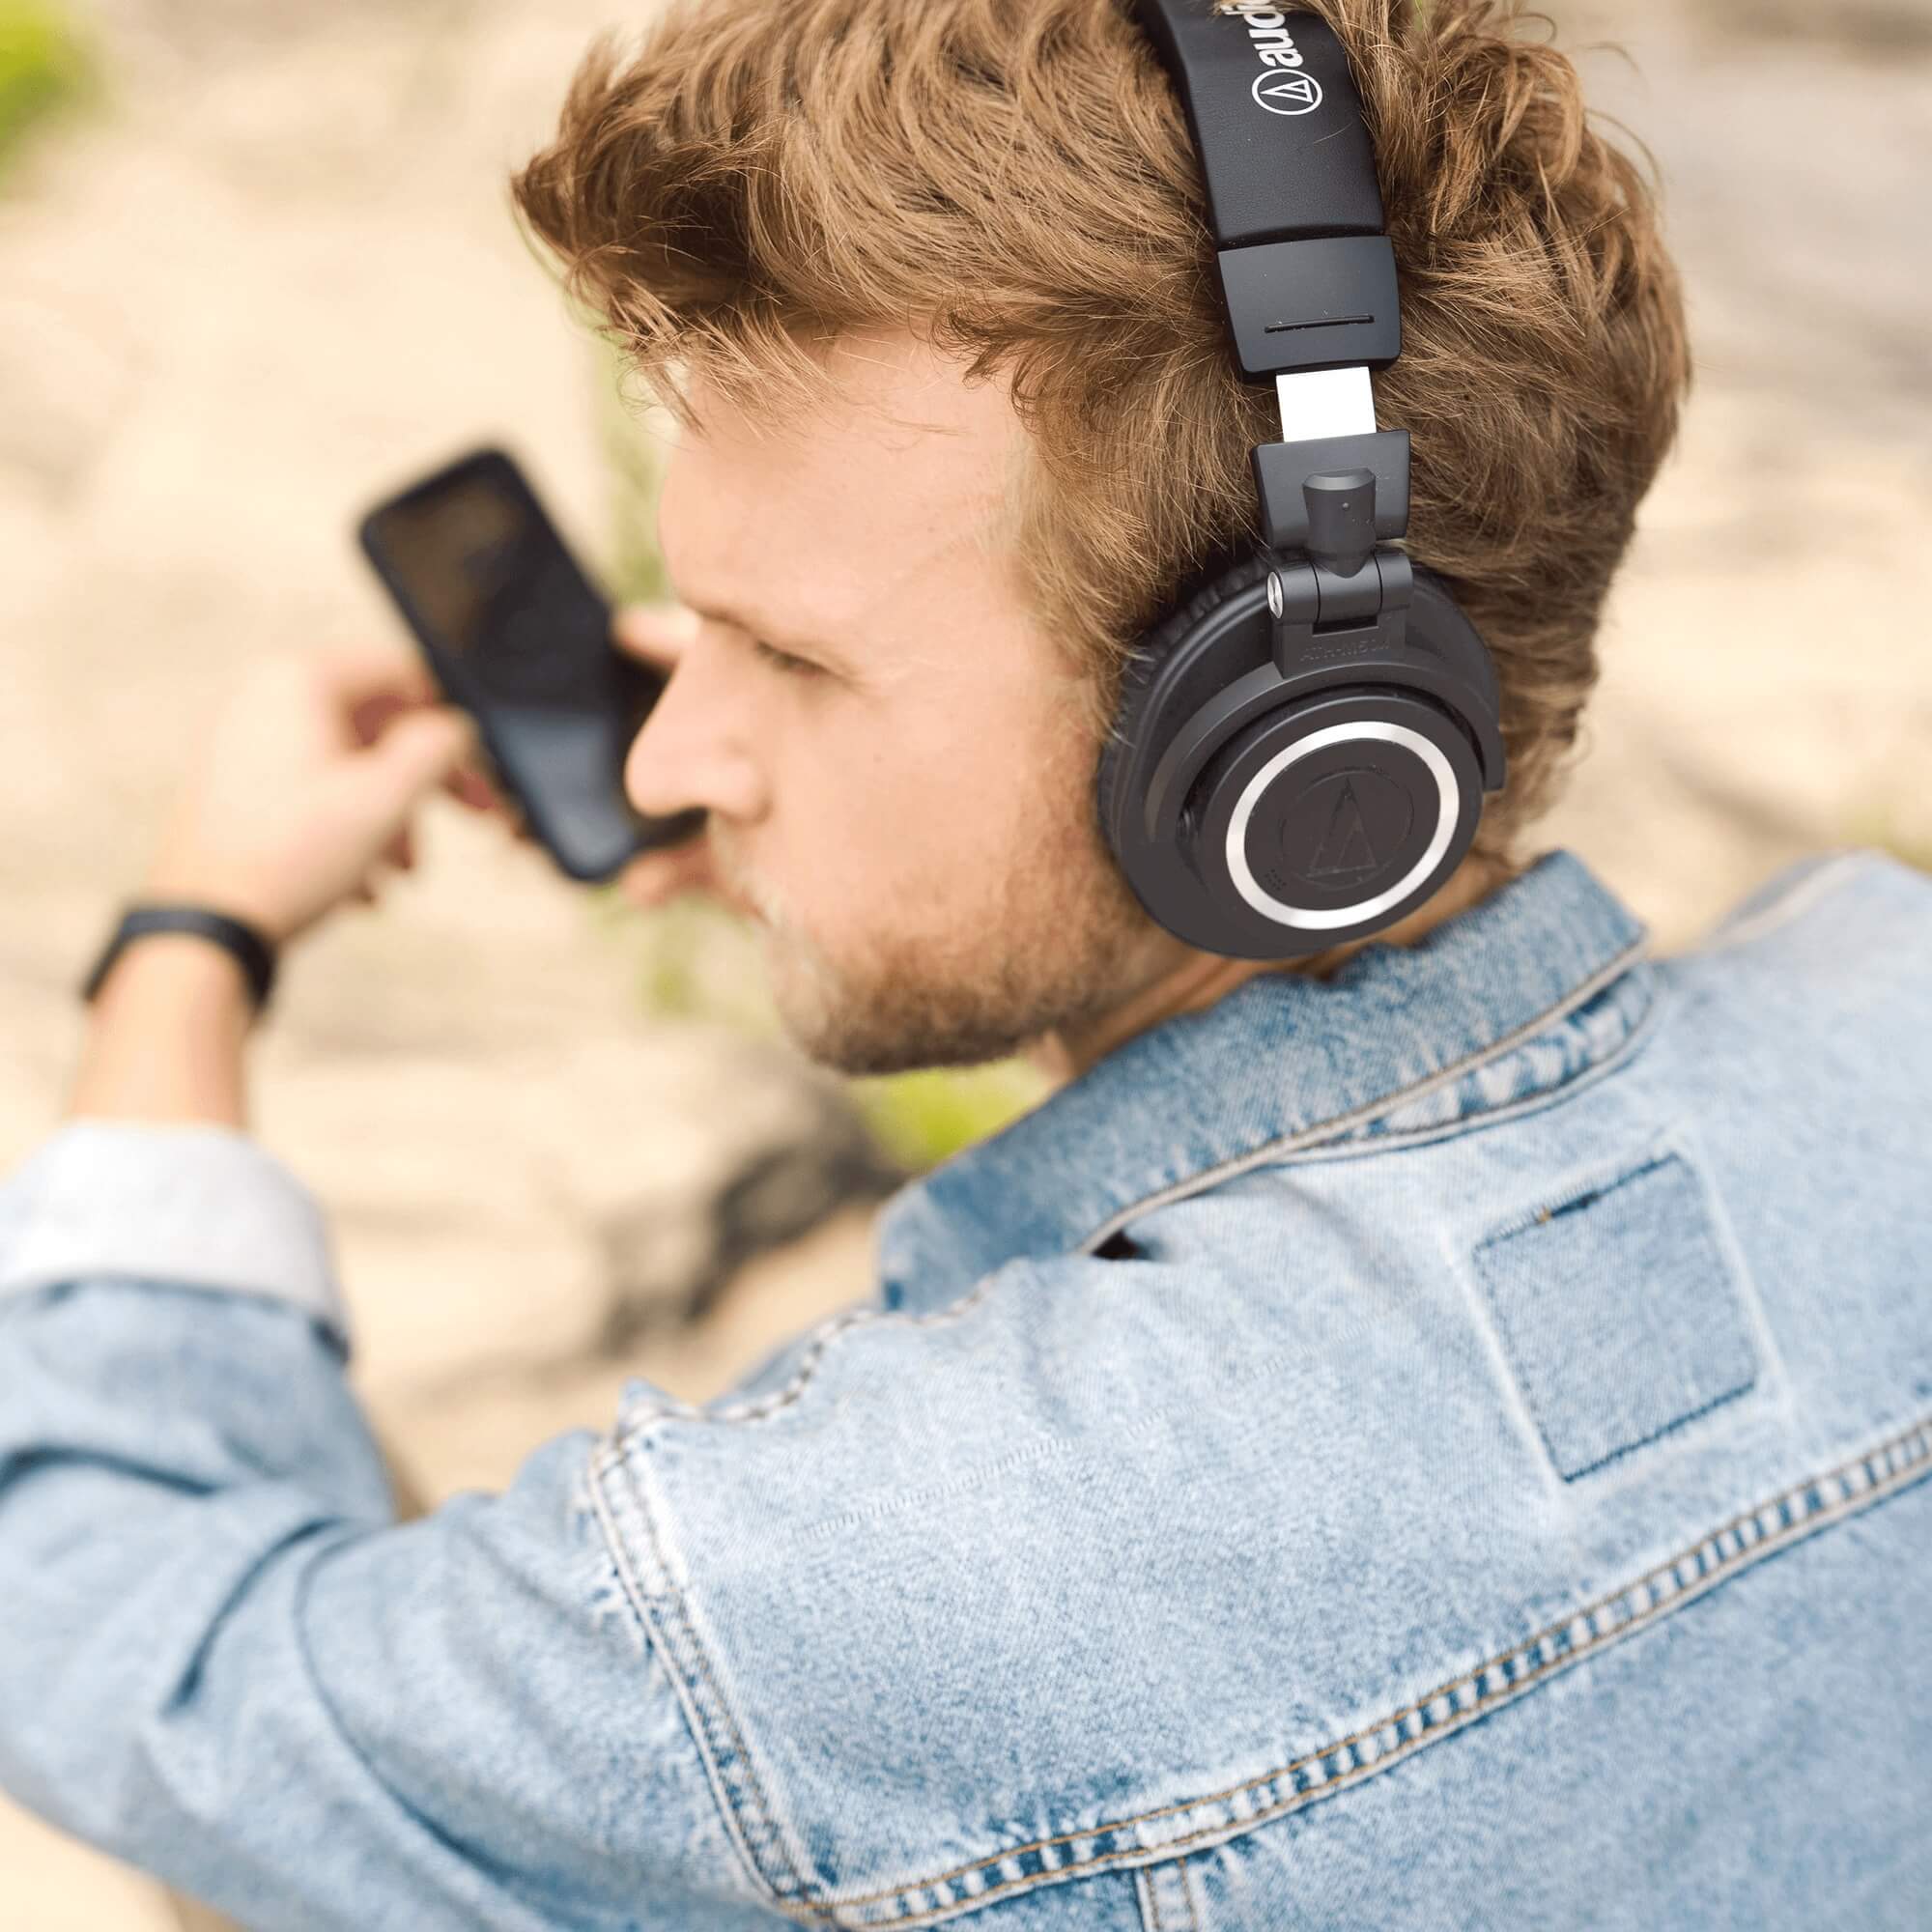 Audio-Technica ATH-M50xBT2 Bluetooth Wireless Over-Ear Headphones